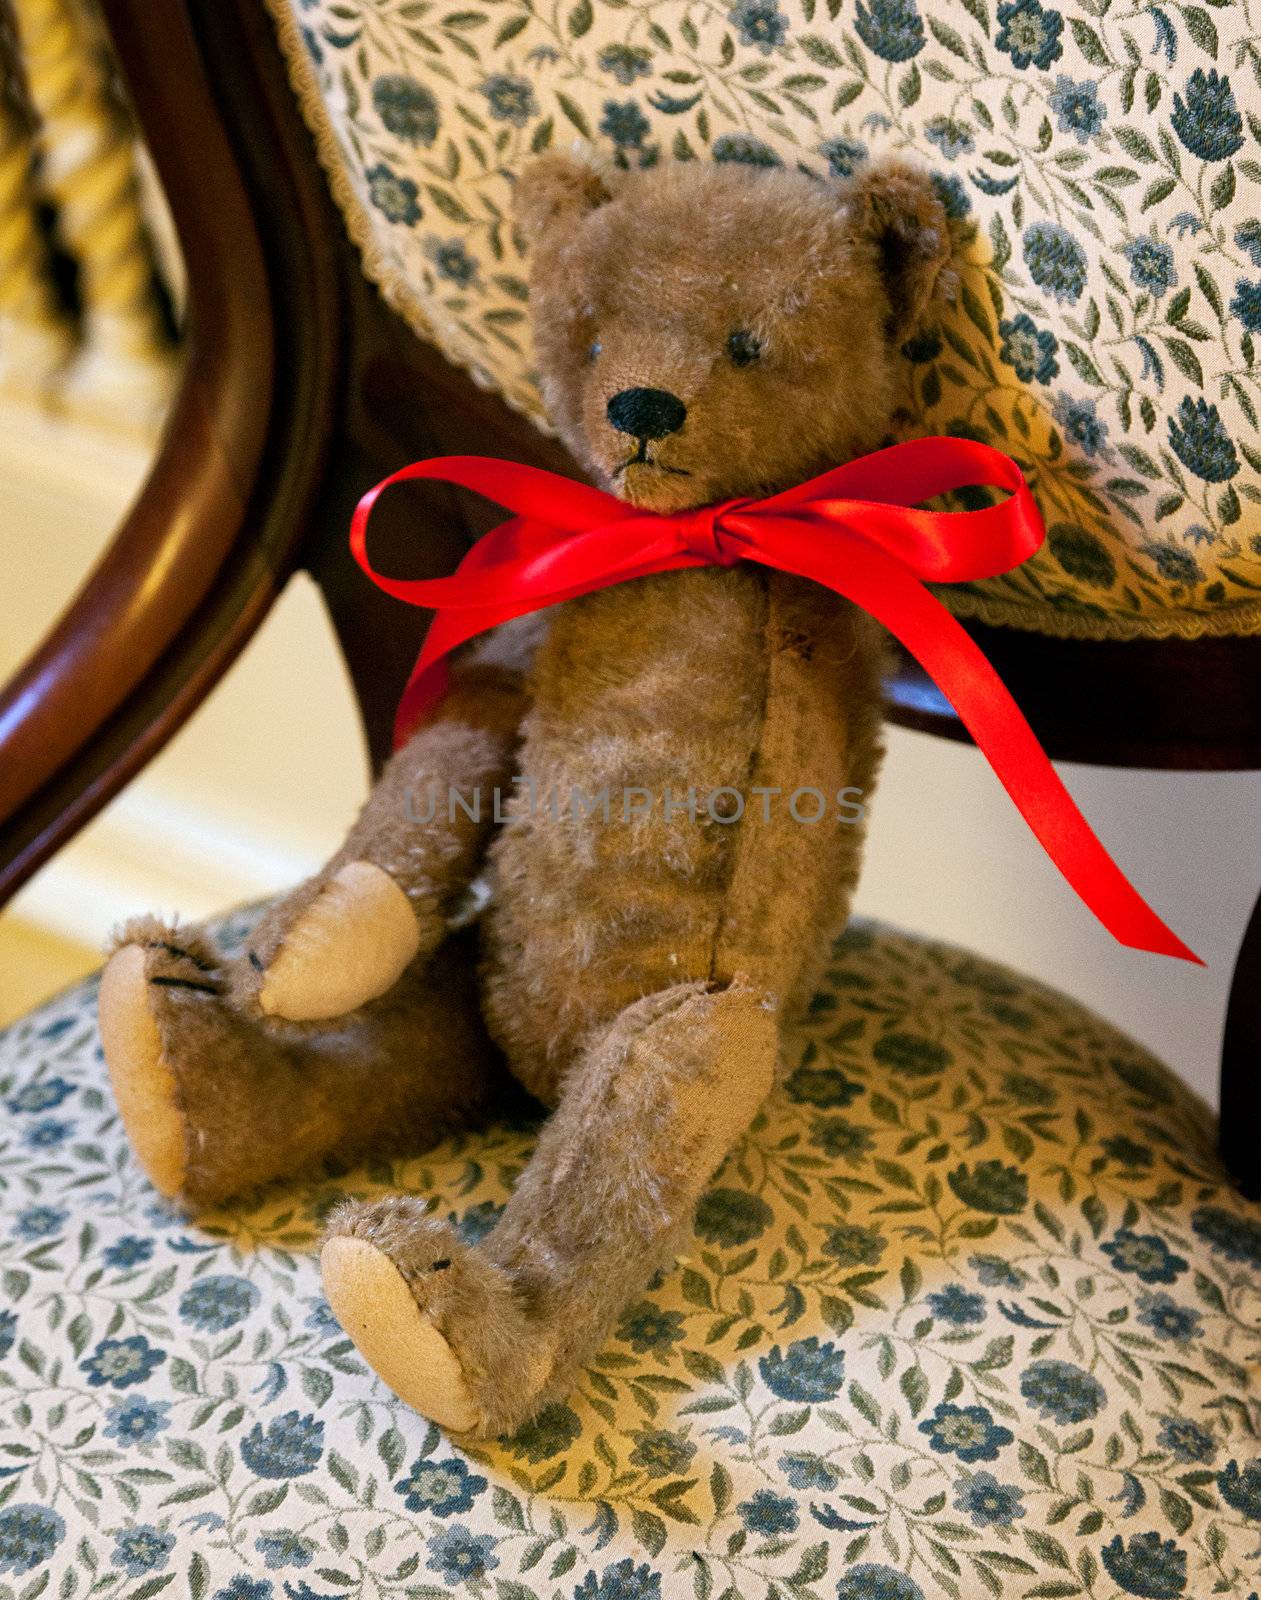 Antique one-armed teddy bear by steheap